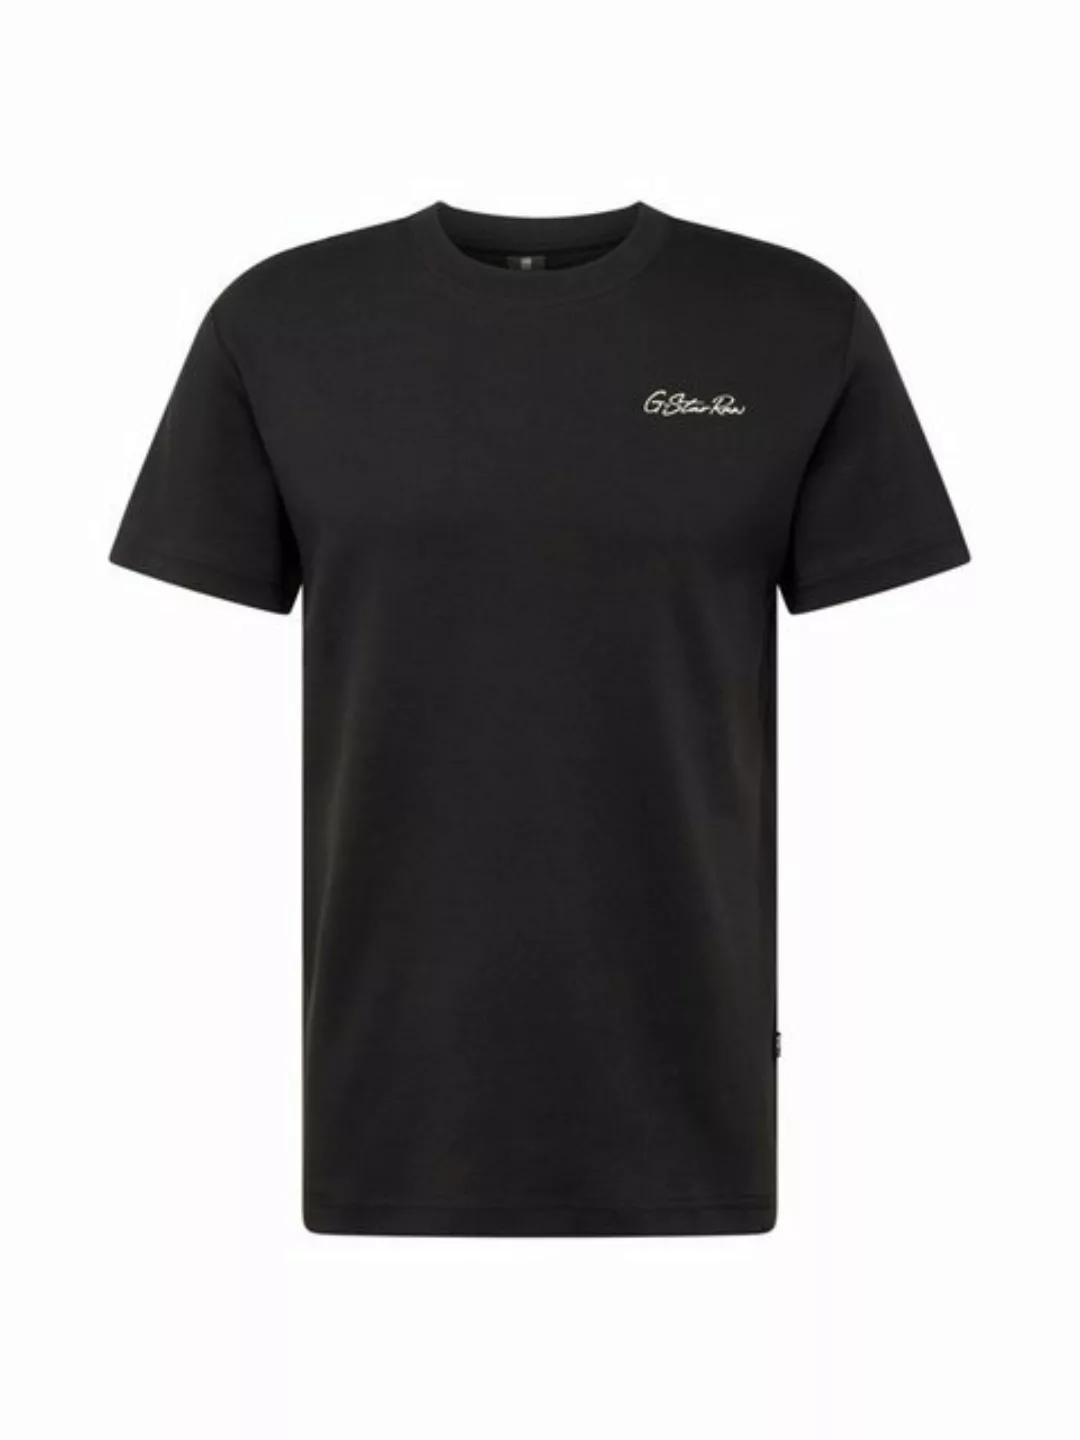 G-Star RAW T-Shirt Back gr slim r t günstig online kaufen